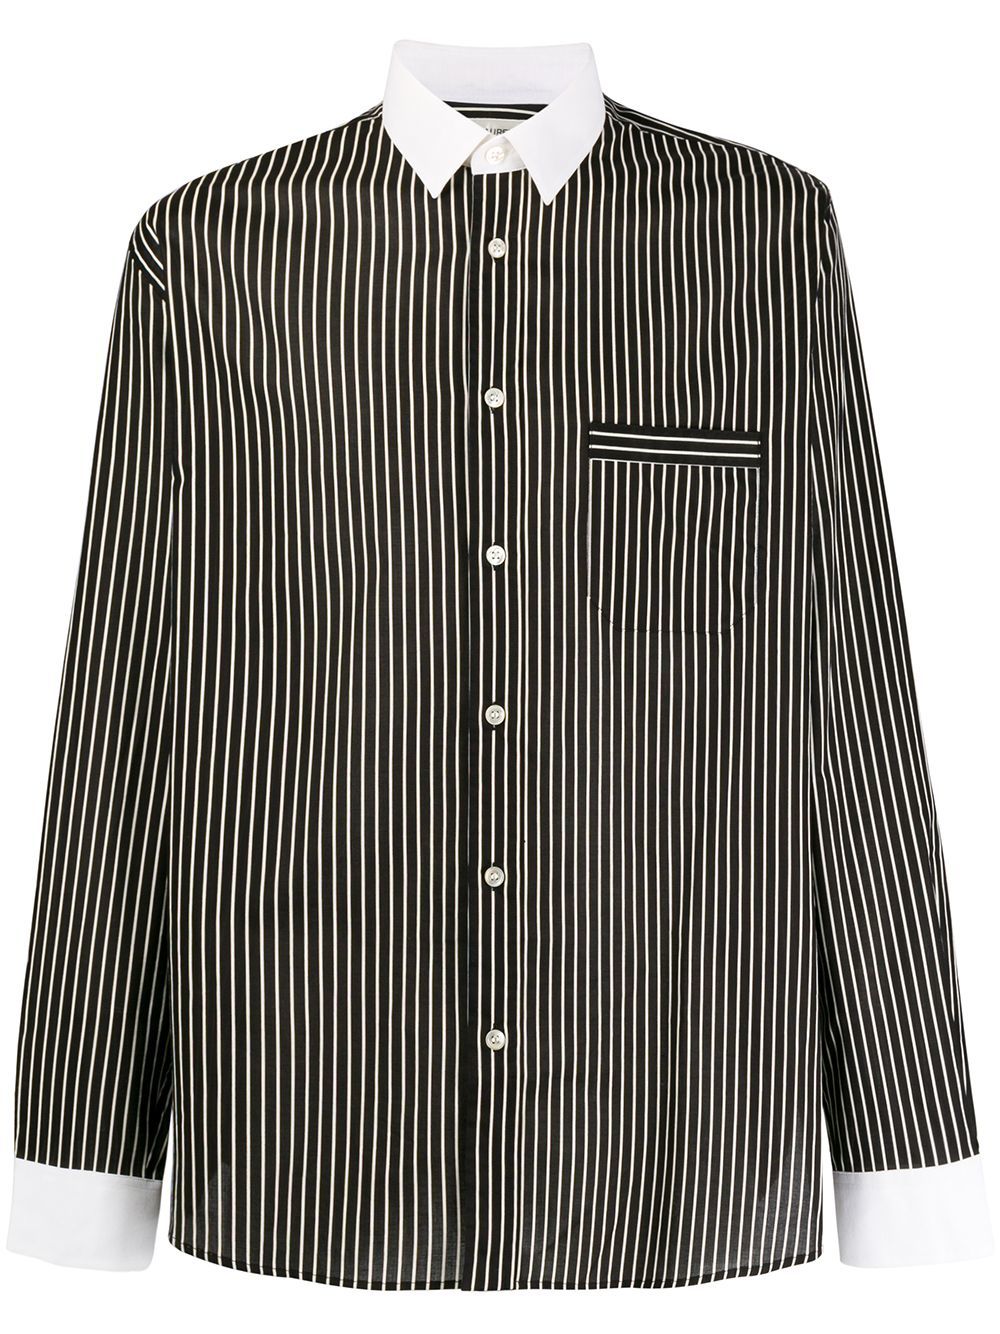 Saint Laurent Striped Contrasting Collar Shirt, $510 | farfetch.com ...